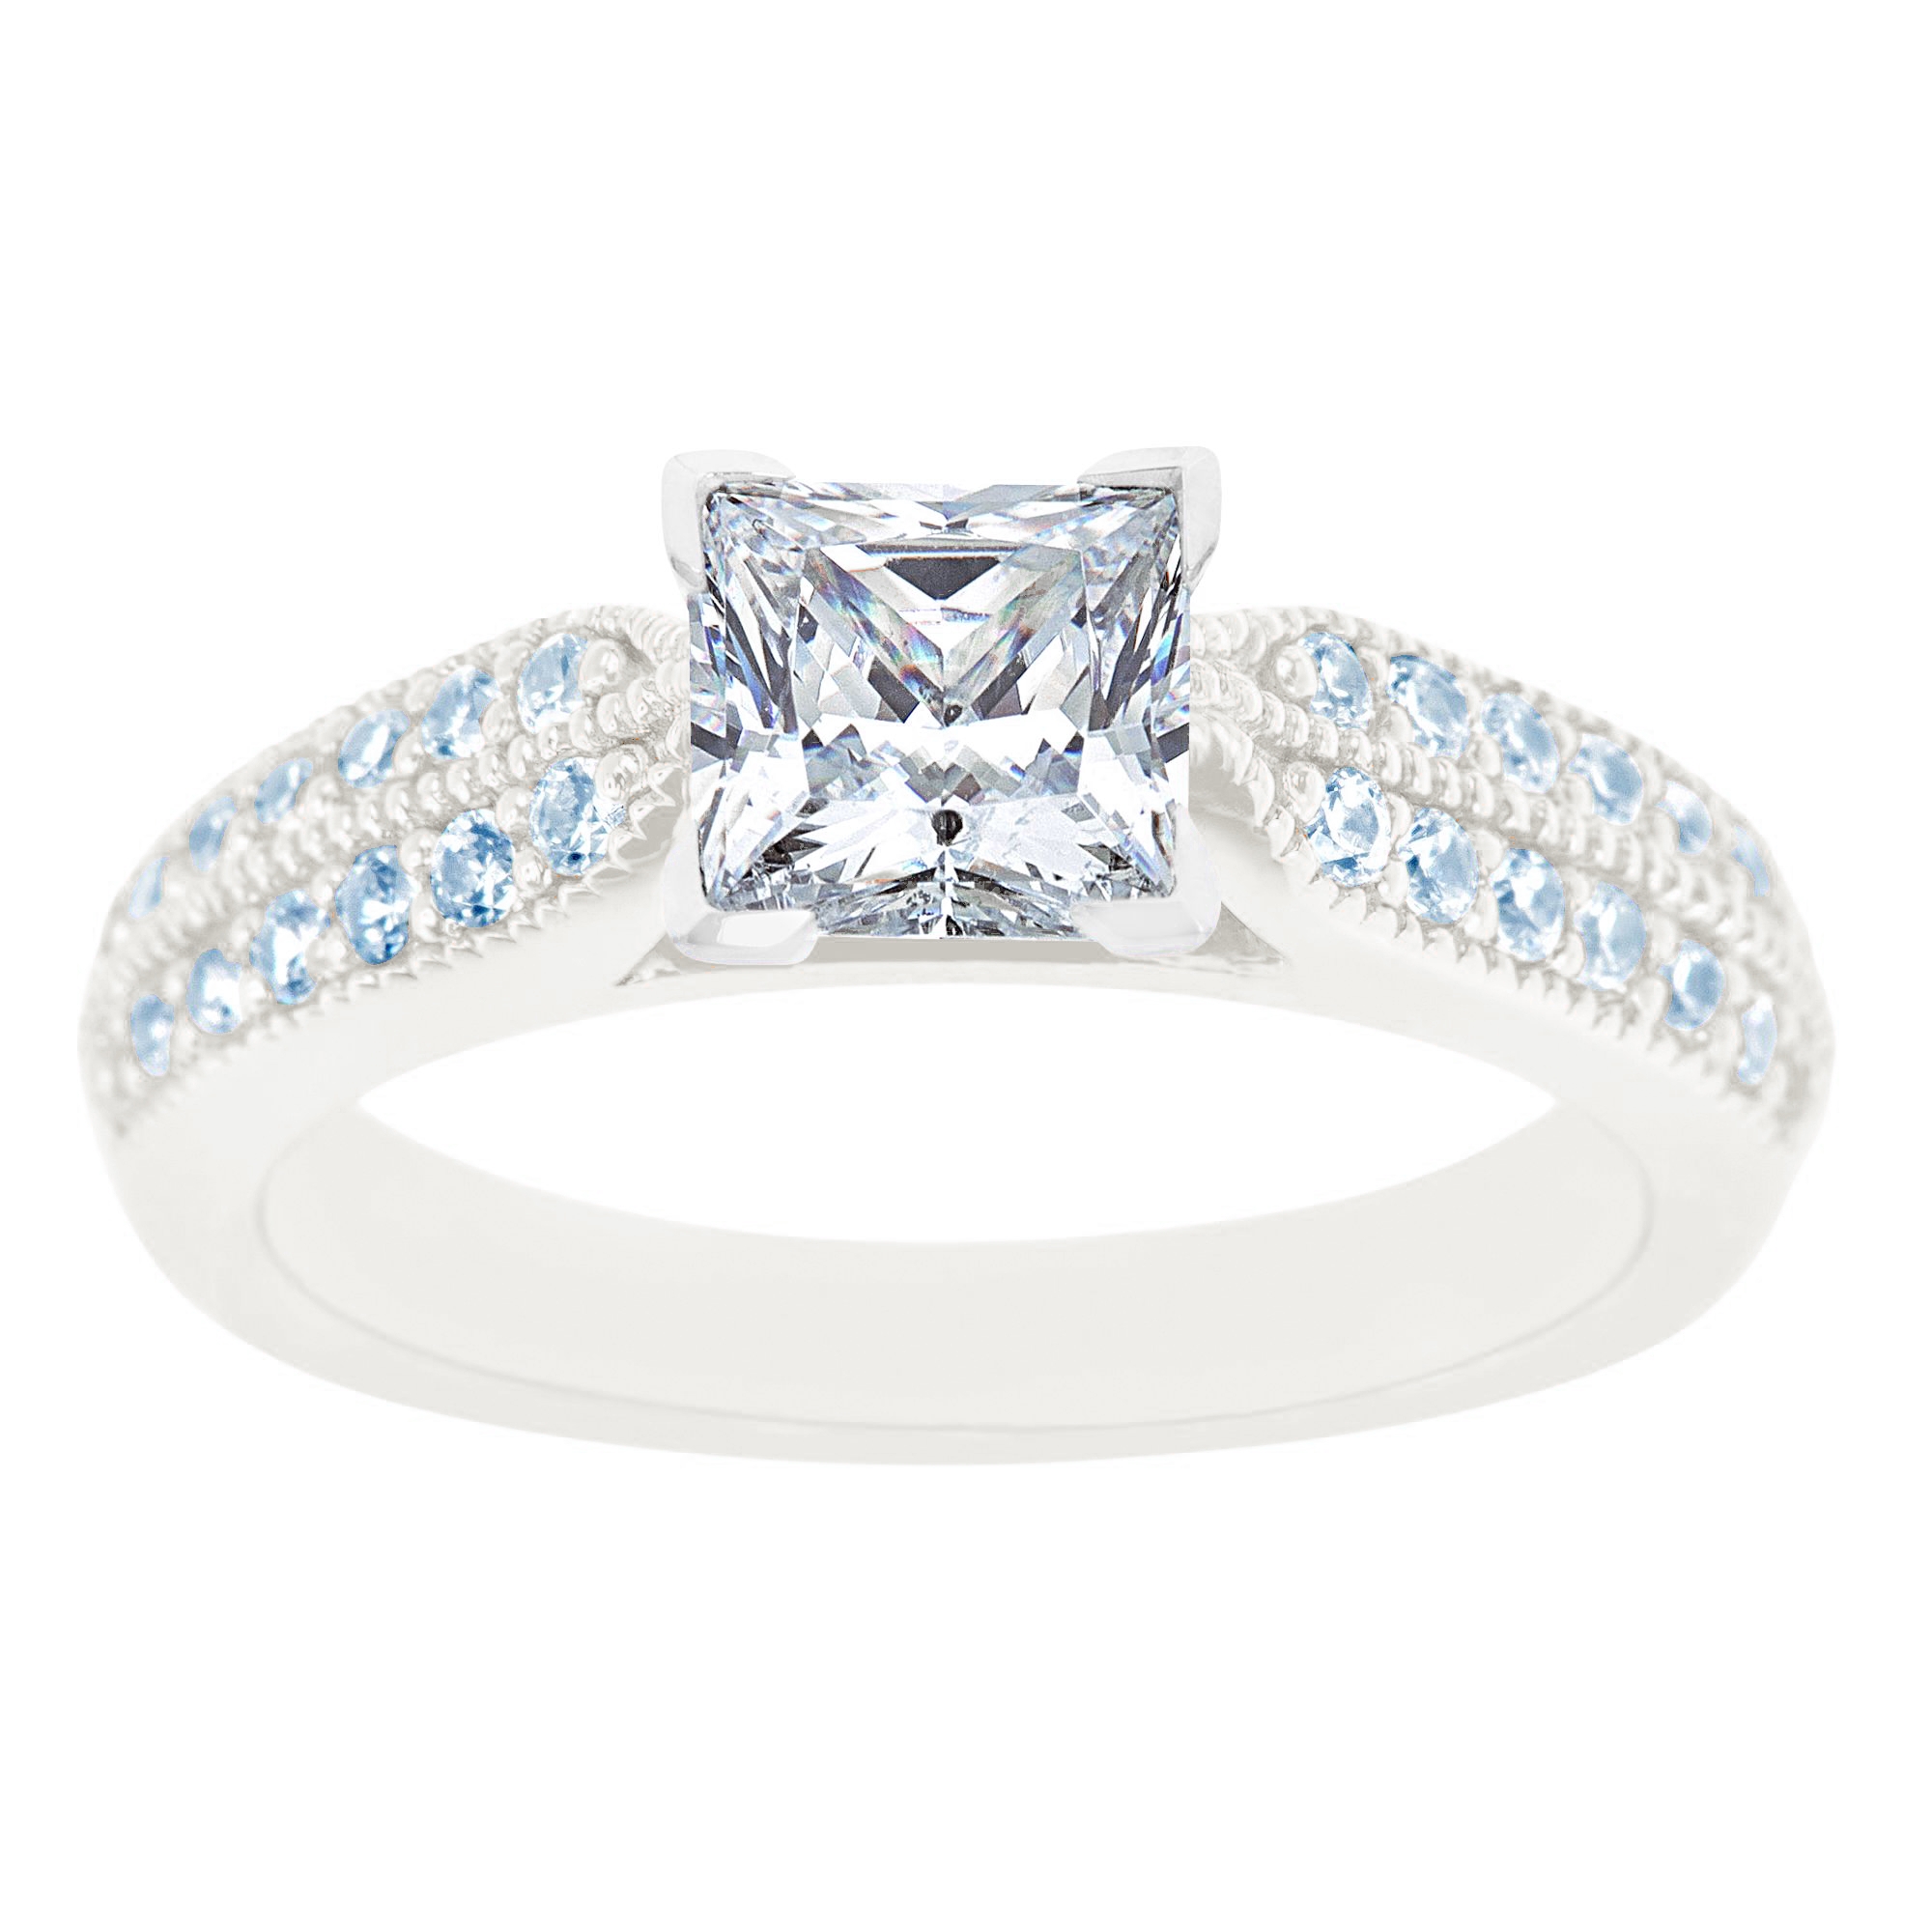 New York City Diamond District 14K White Gold Milgrain Double Row Princess Cut Certified Diamond Engagement Ring